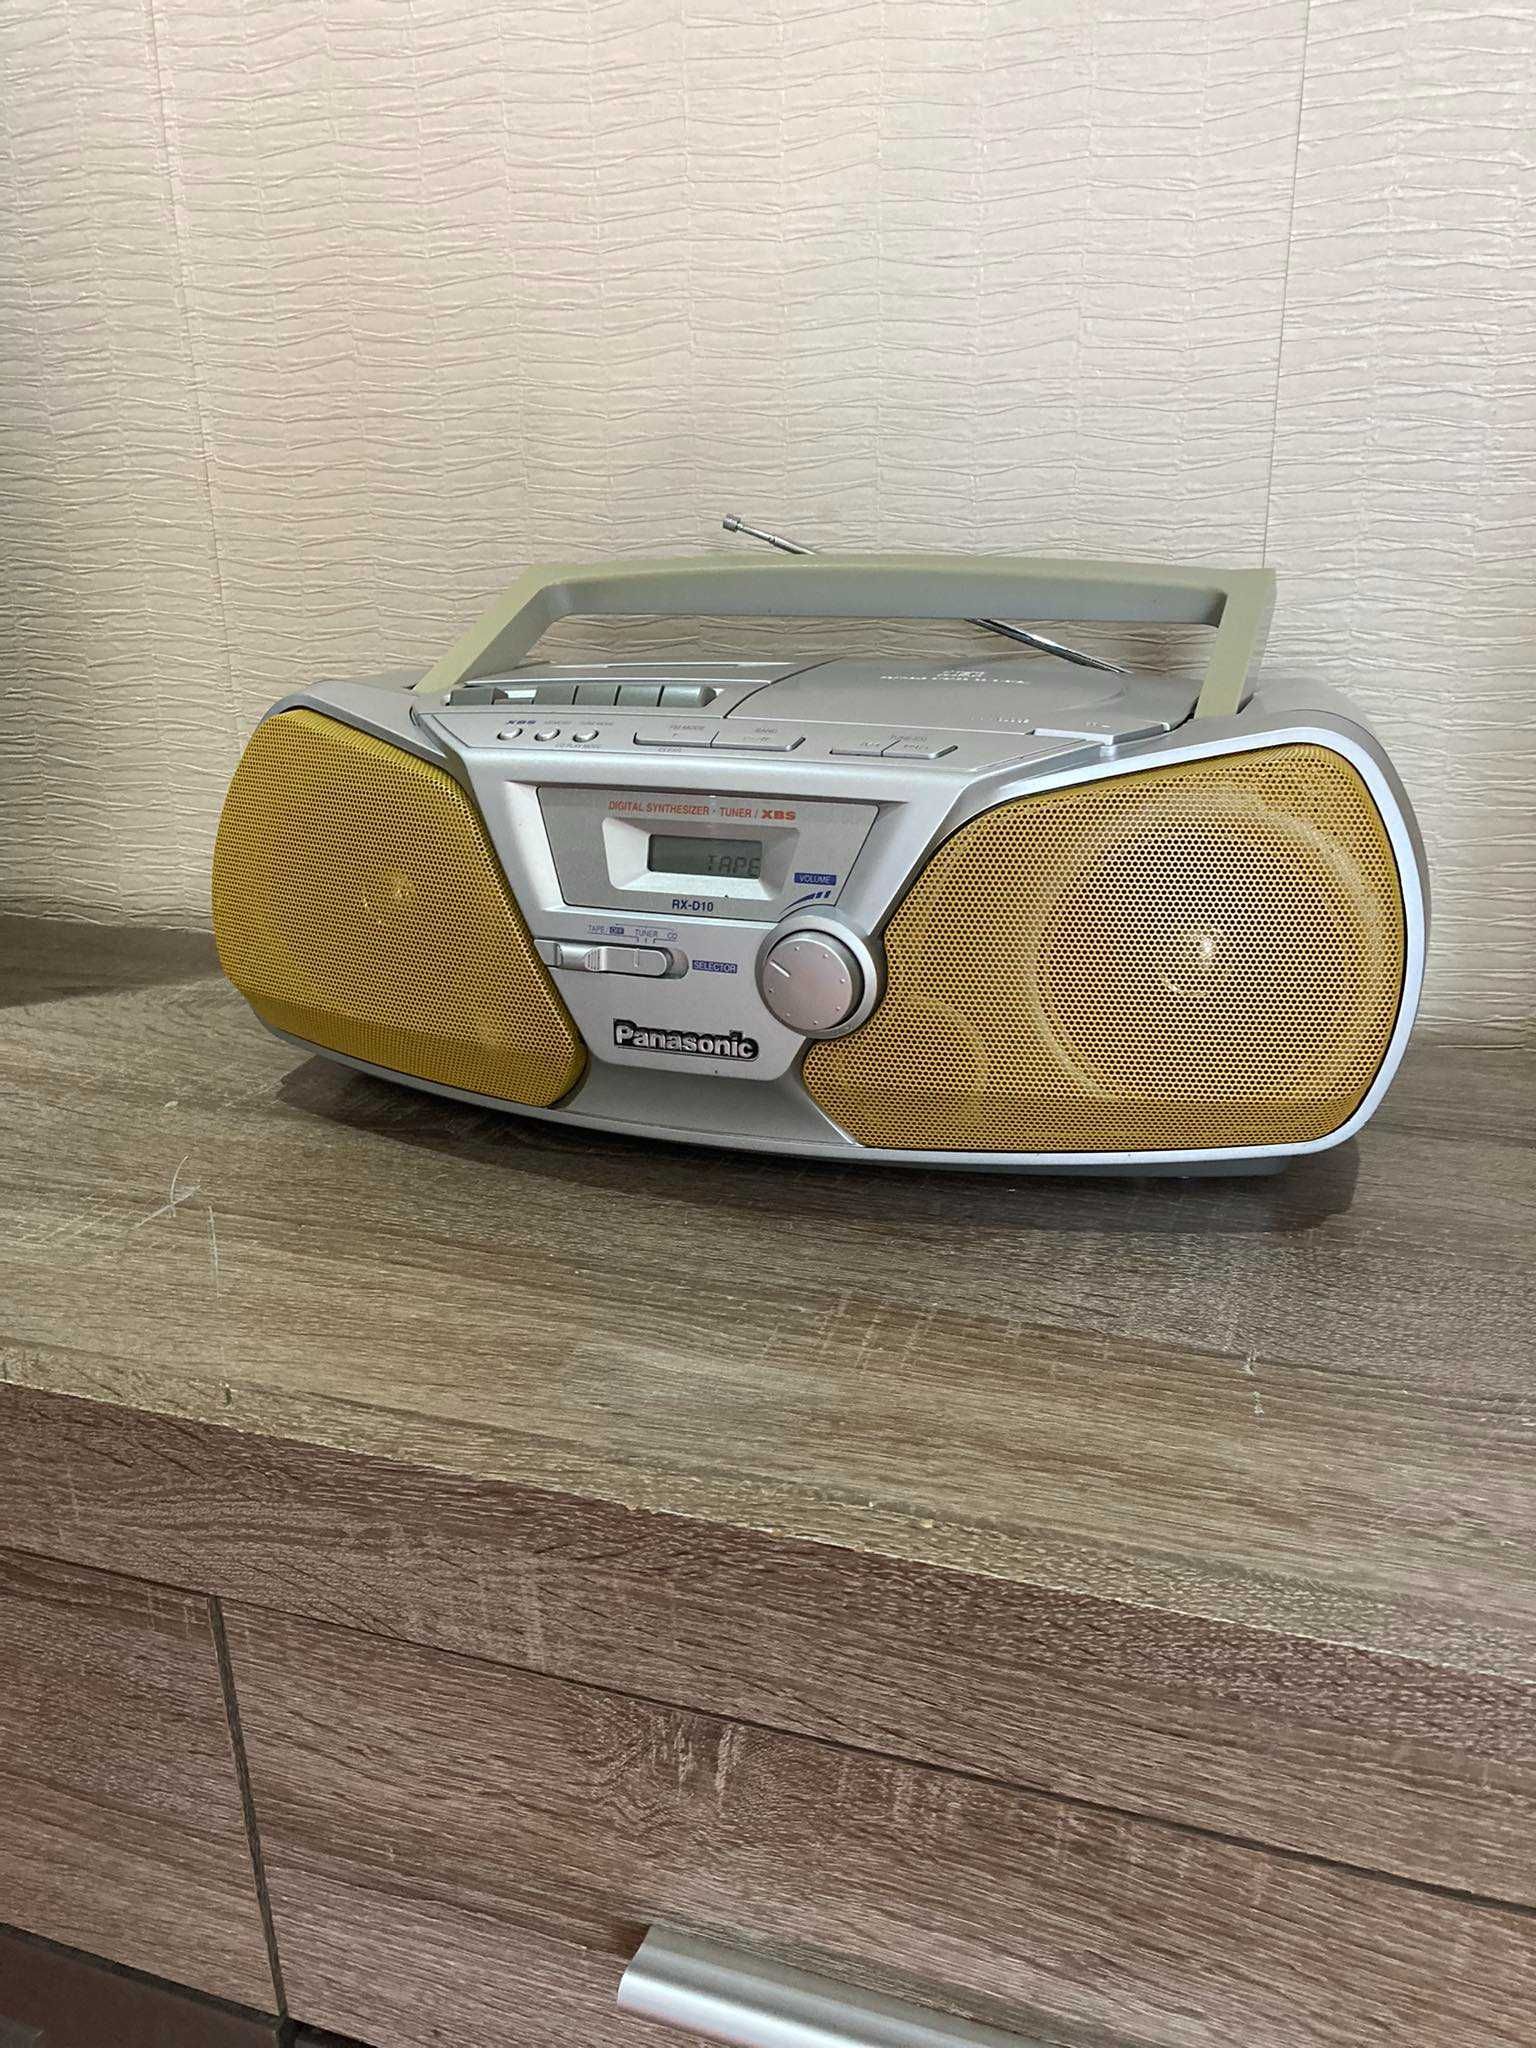 Panasonic RX-D10 CD Радиокасетофон